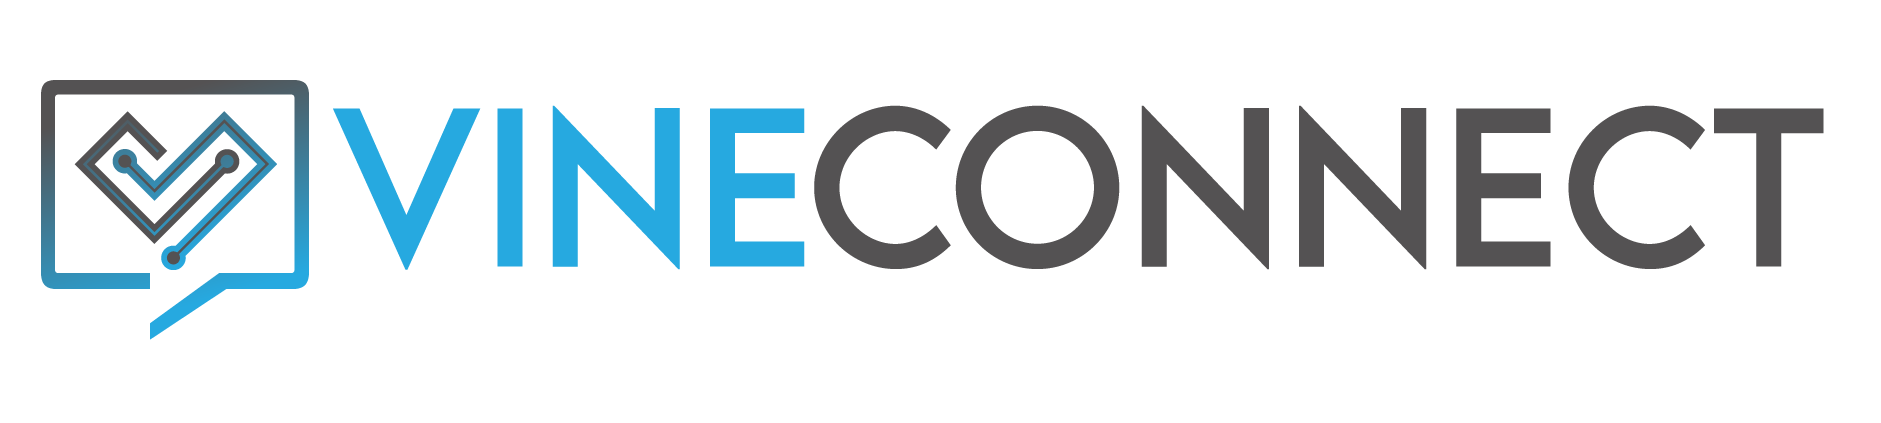 VineConnect Logo